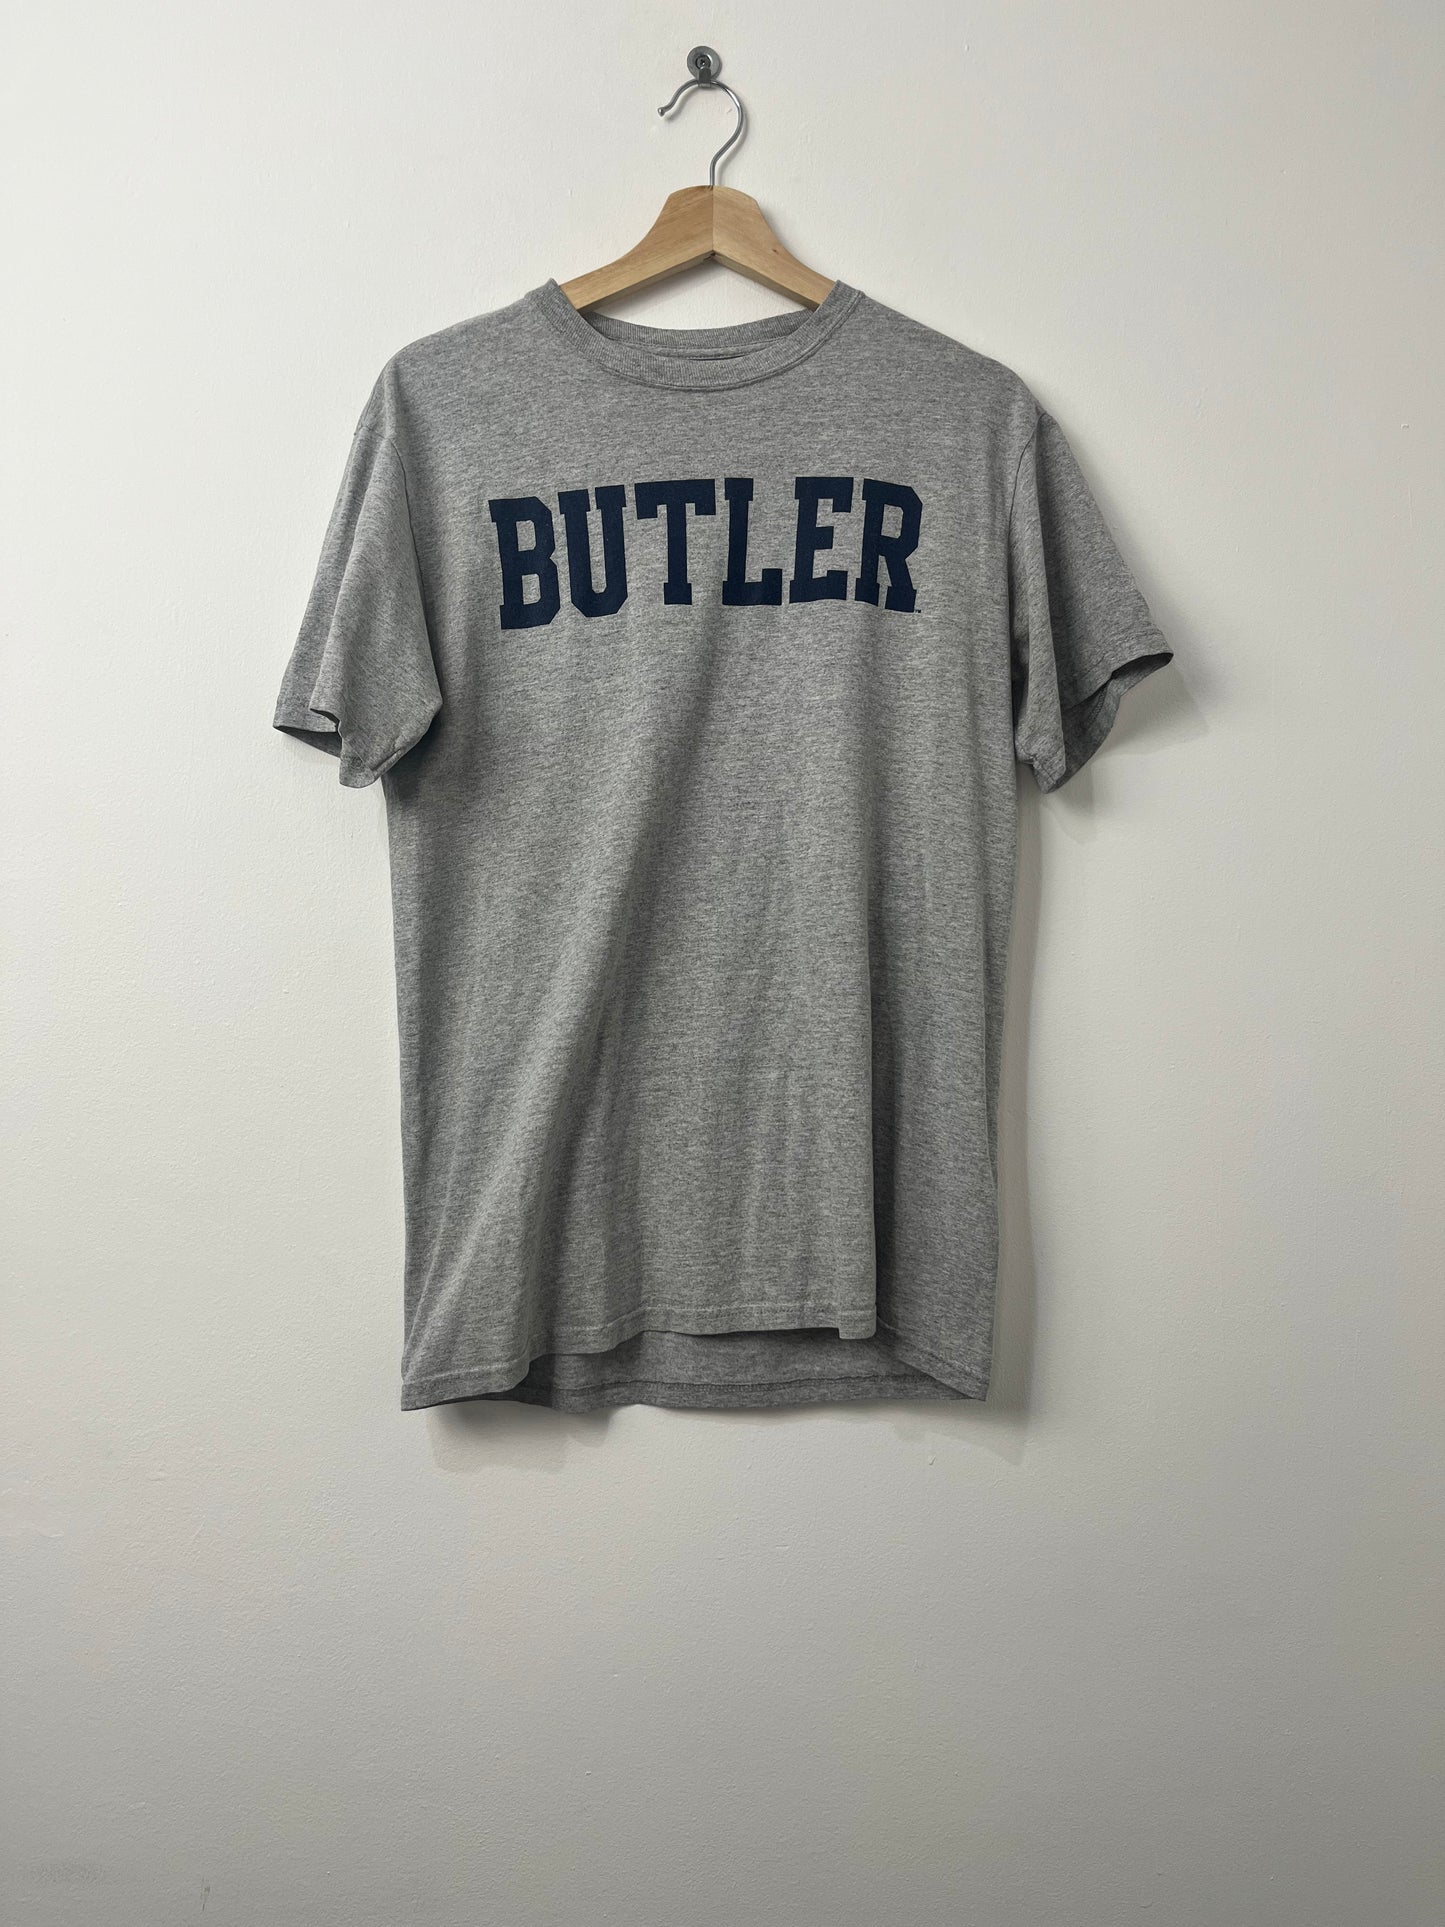 Vintage Butler Champion T Shirt